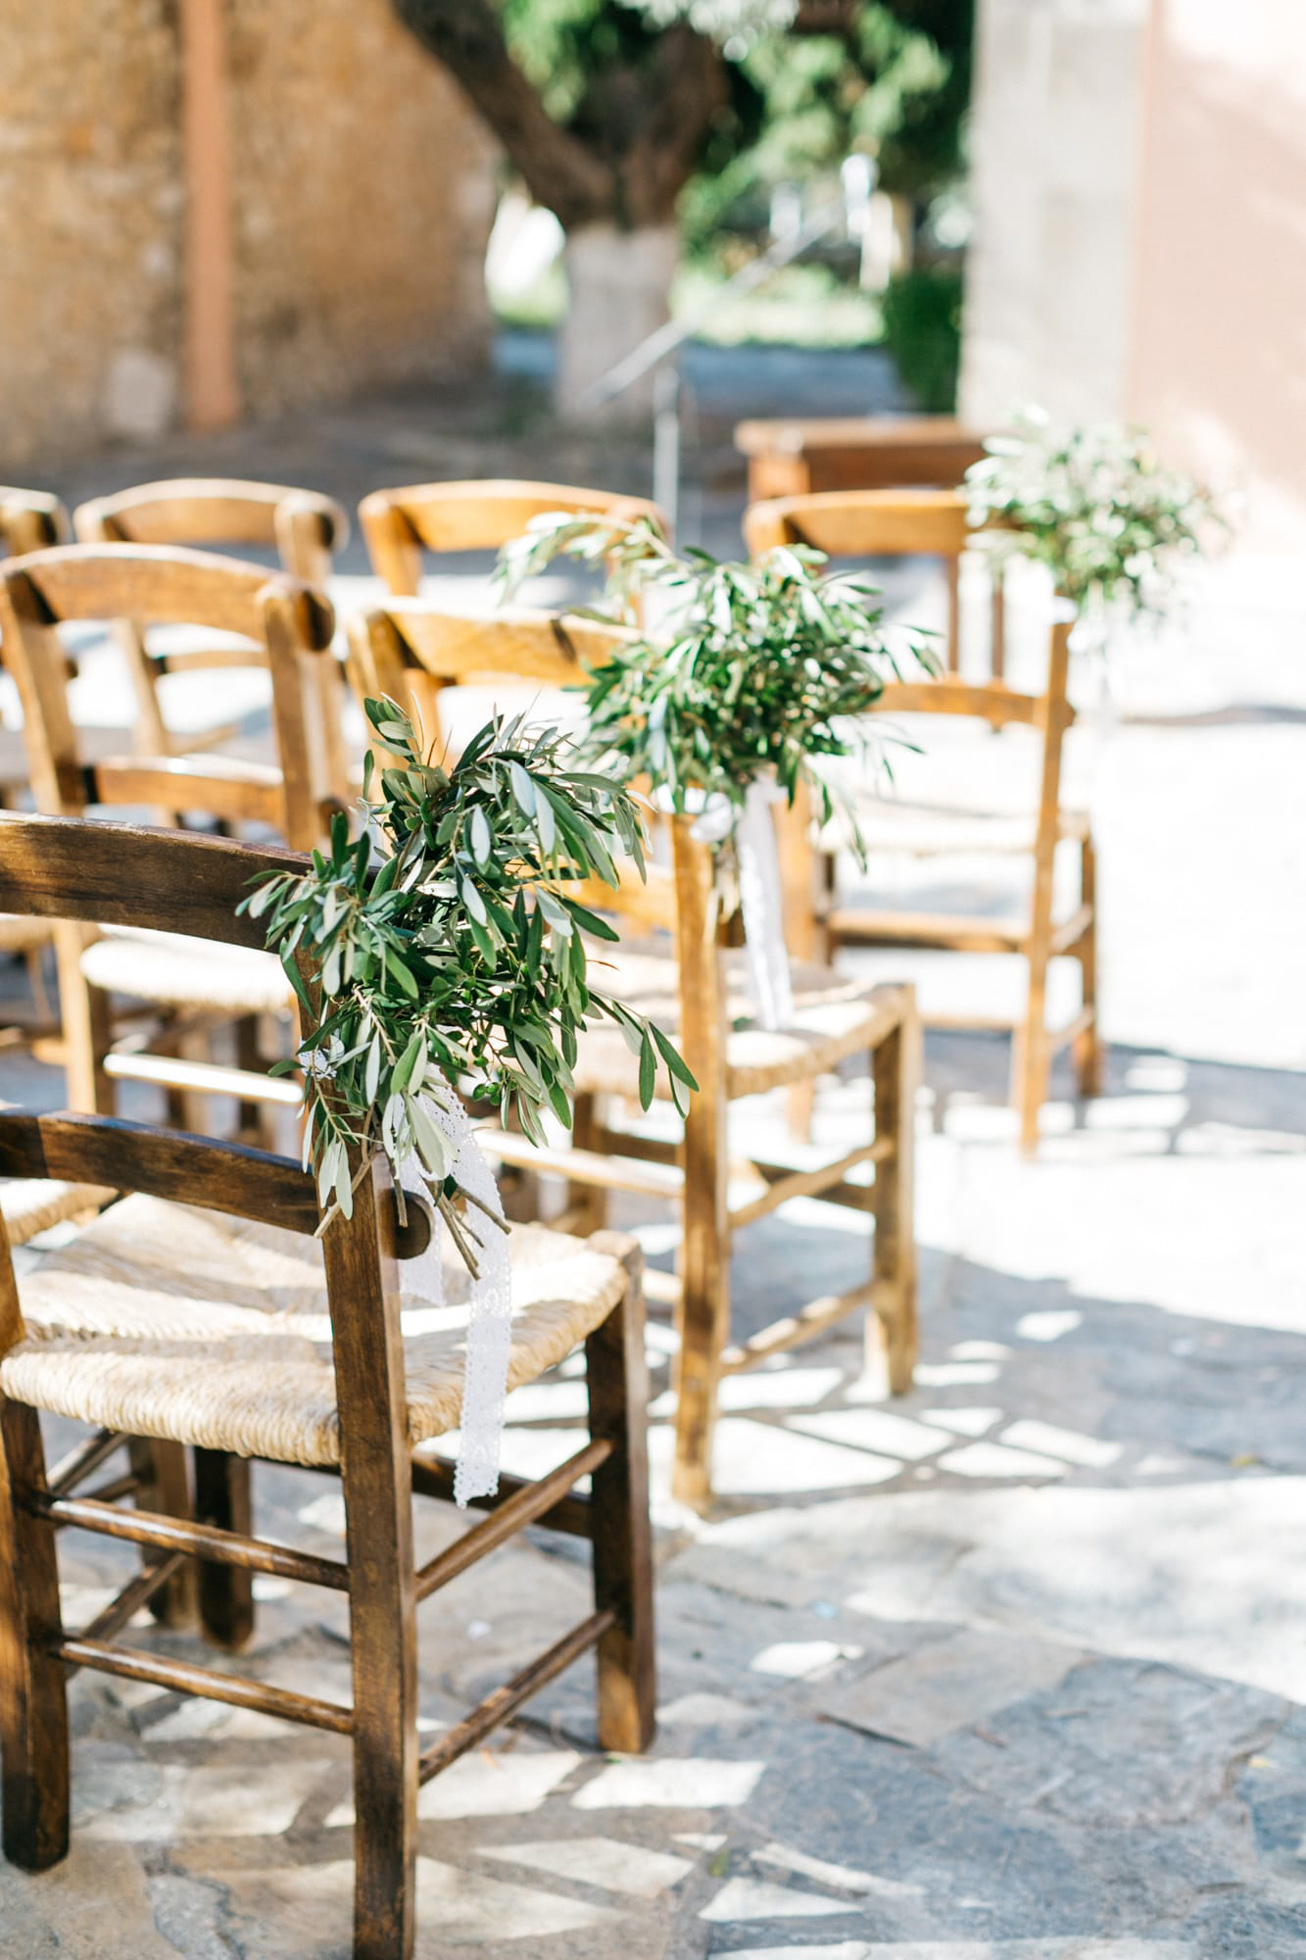 Destination wedding ceremony setup in Agreco Farms, Grecotel, Crete, Greece.